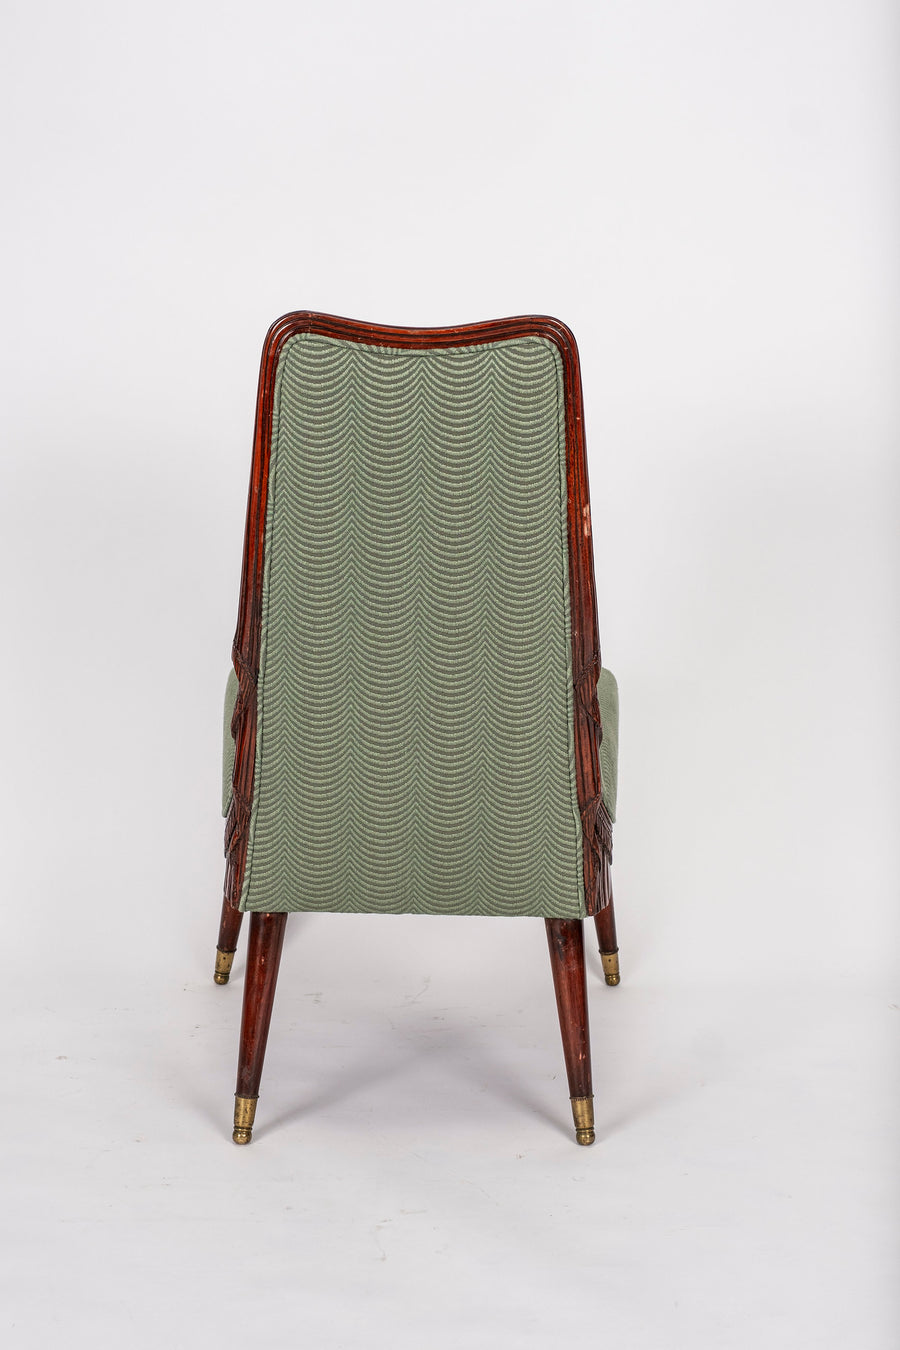 Pair Neisha Crosland Hurdles Art Deco Chairs